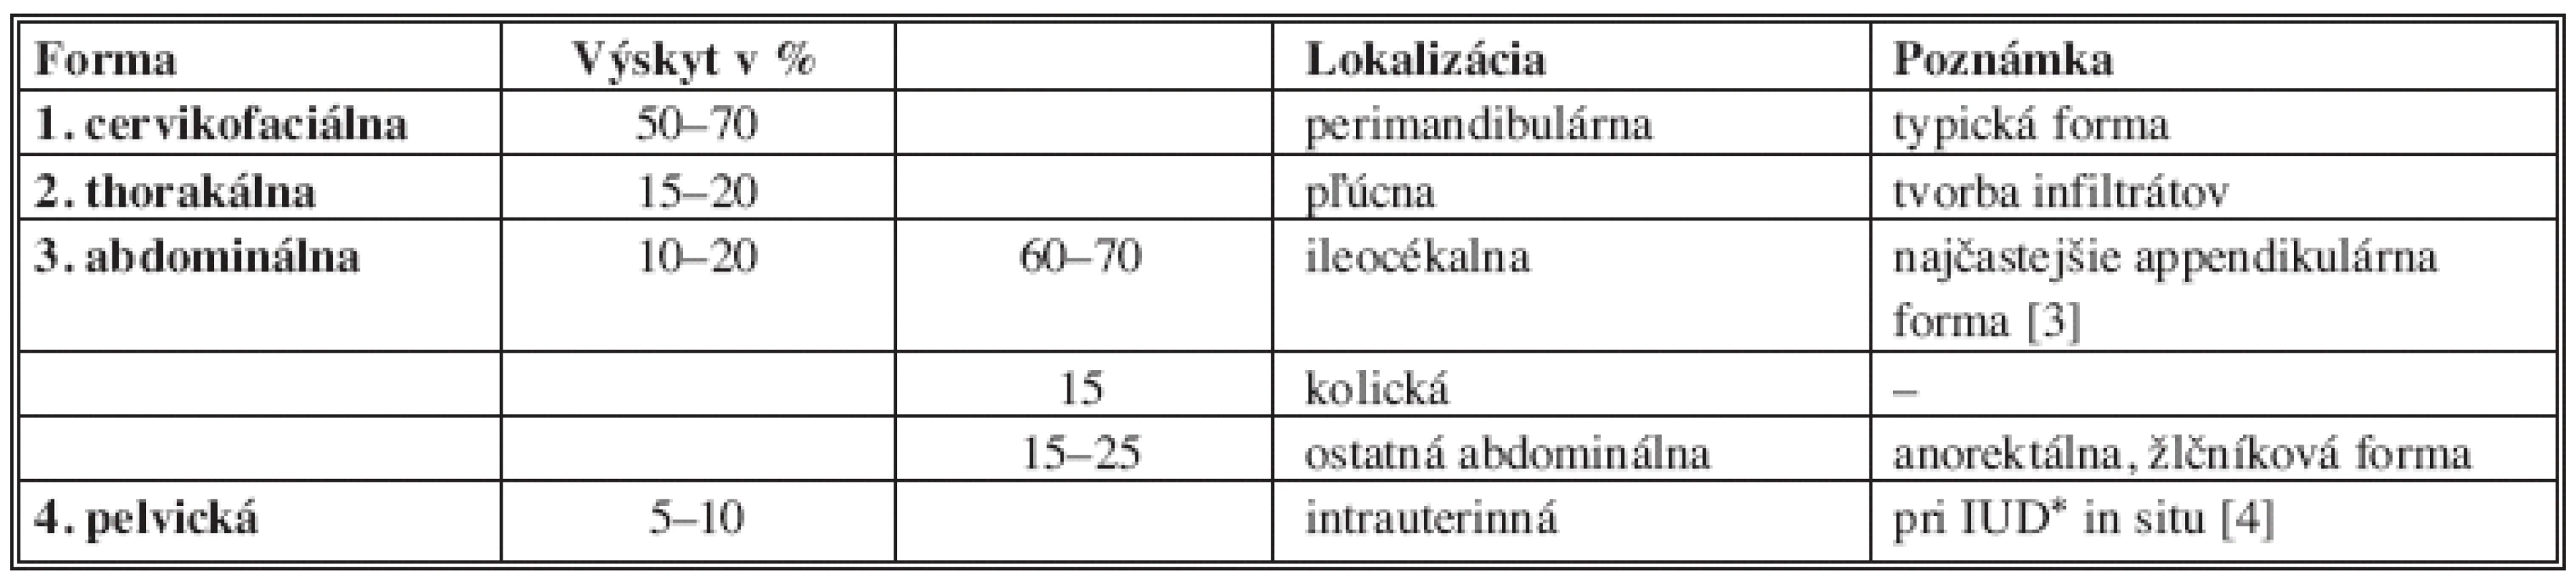 Klinické formy aktinomykózy
Tab. 1: Clinical forms of actinomycosis